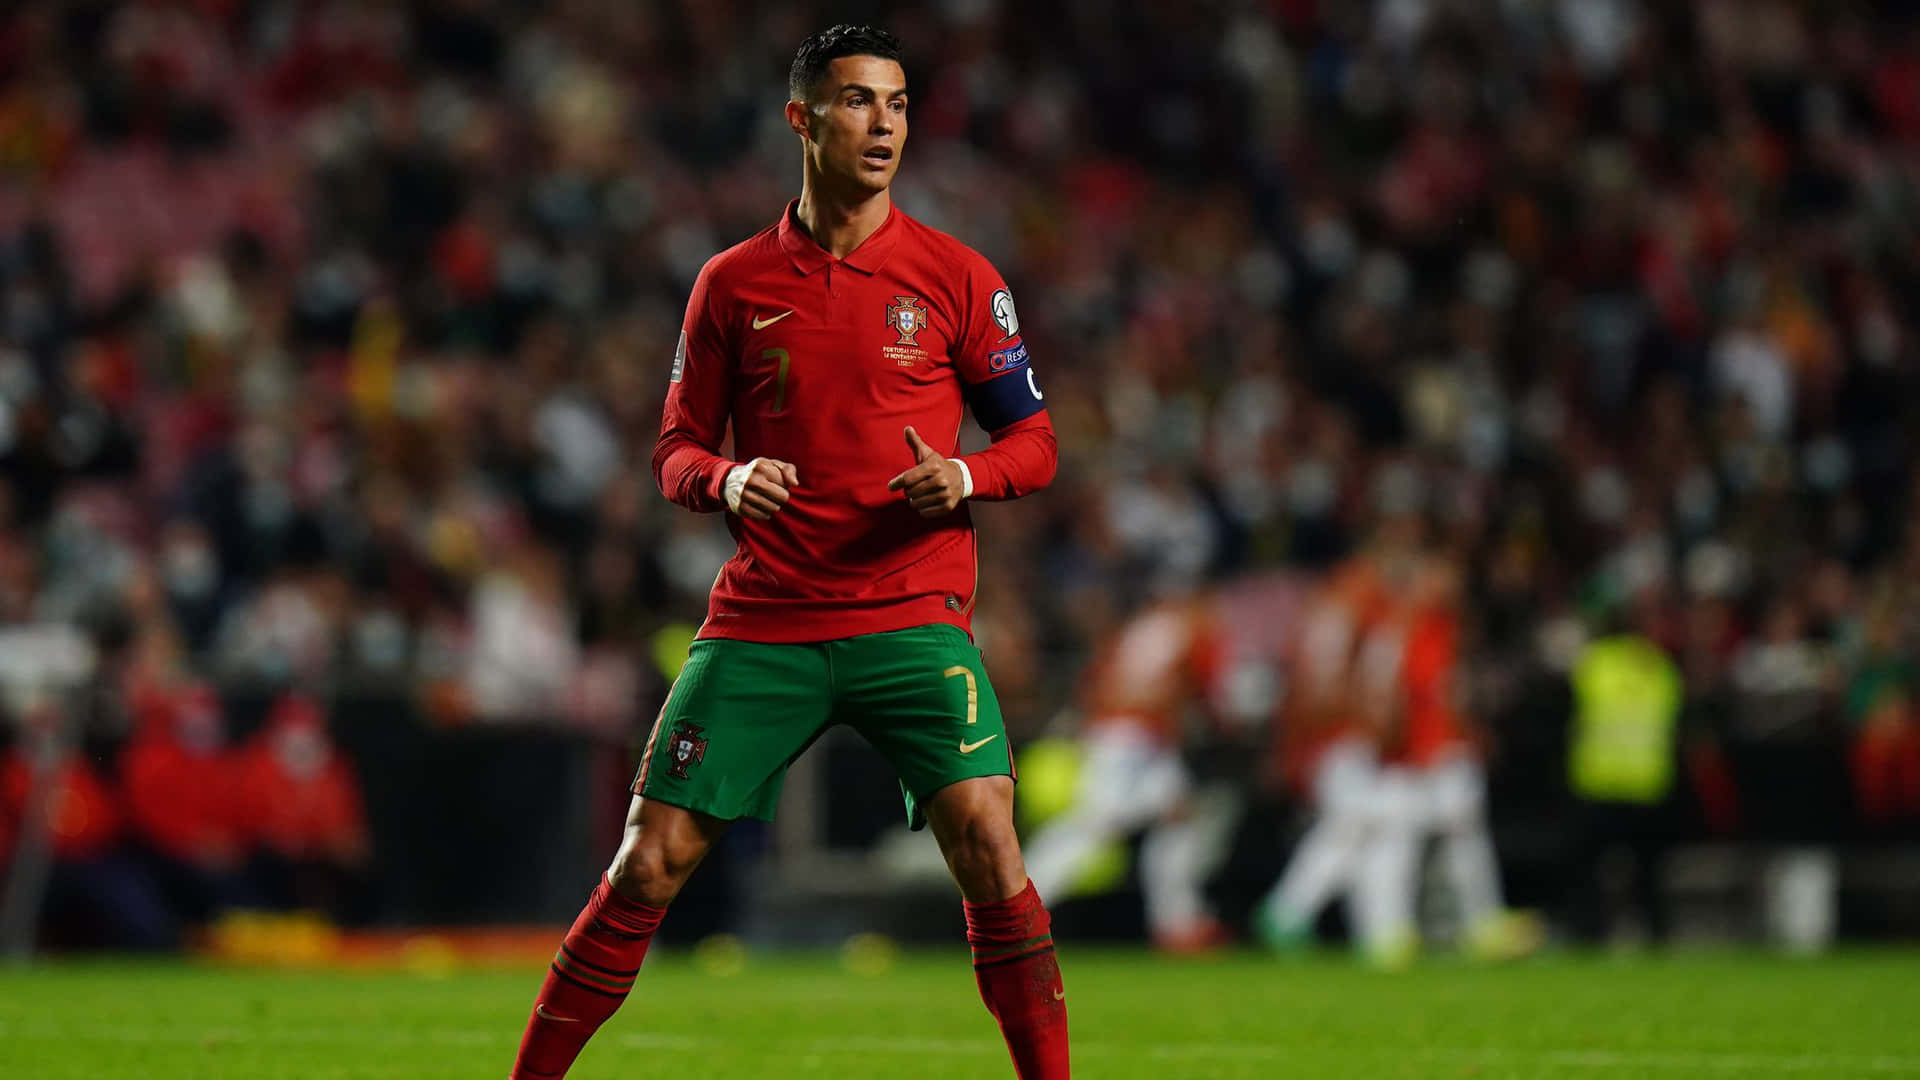 Cristiano Ronaldo - The Iconic Soccer Superstar